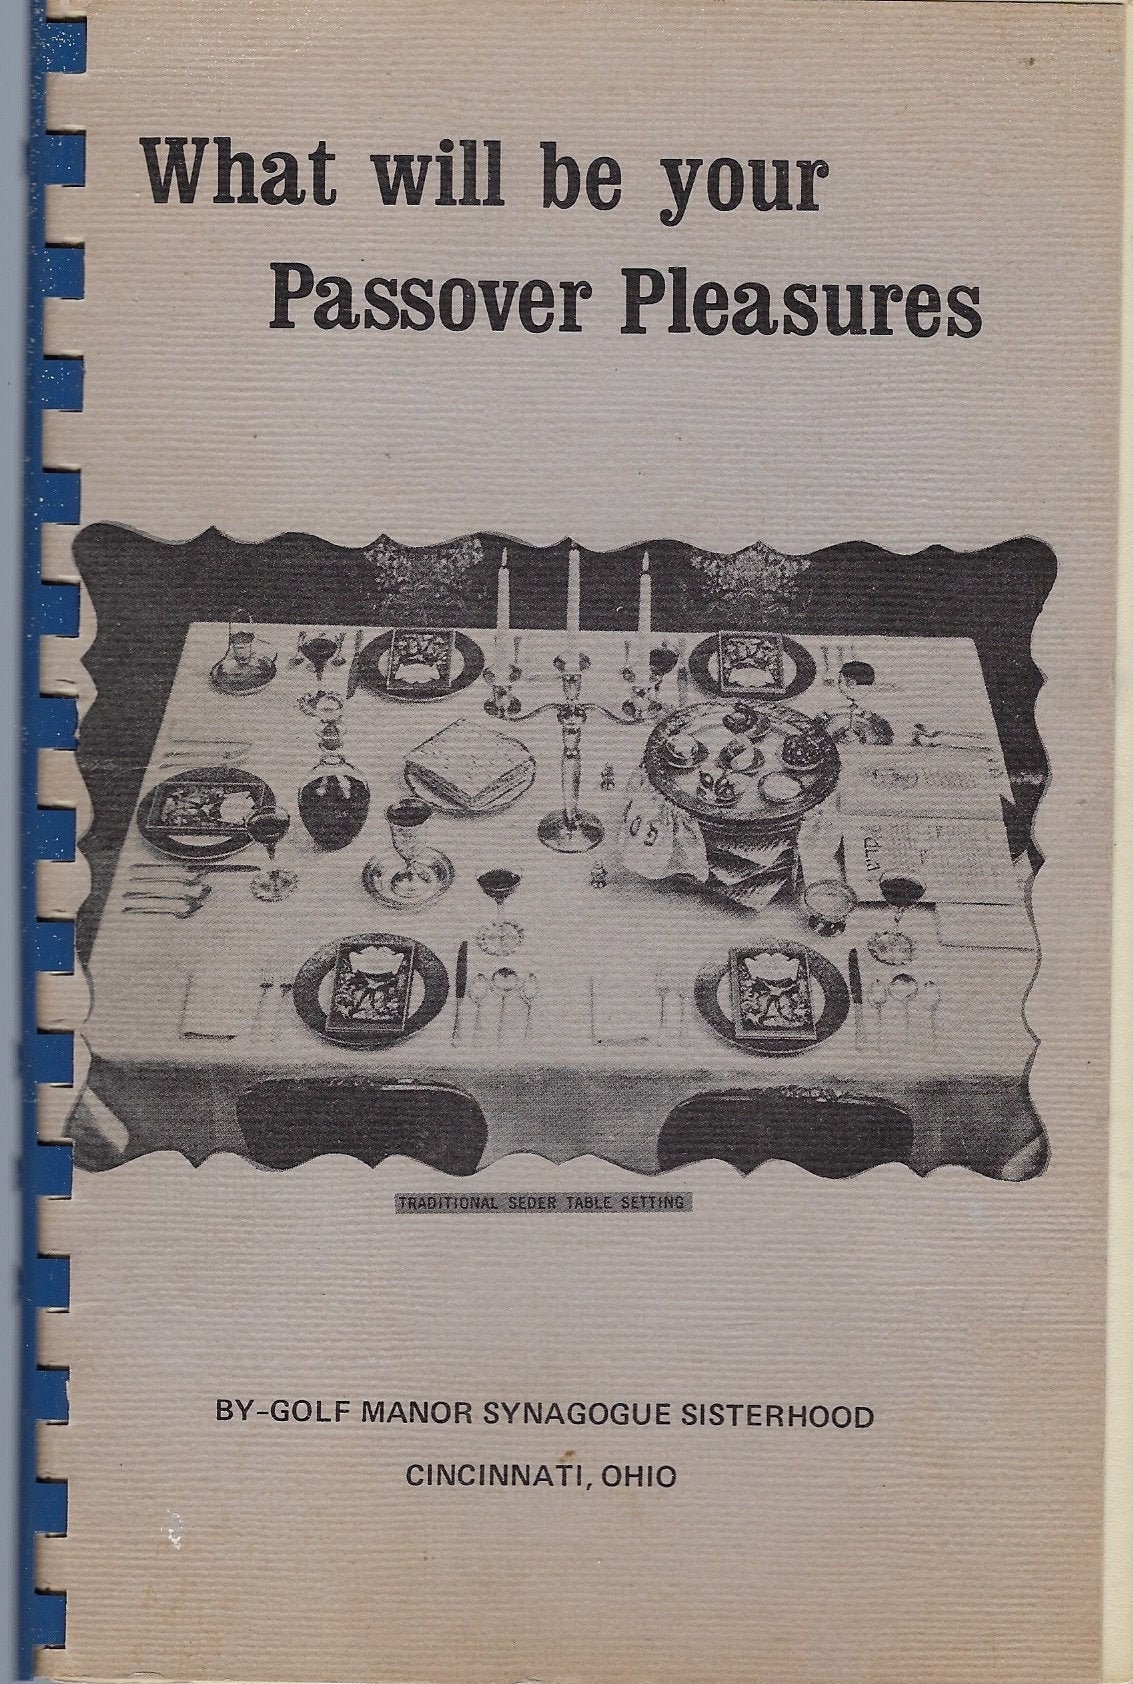 Cincinnati Ohio Vintage 1975 Golf Manor Synagogue Sisterhood Cookbook What Will Be Your Passover Pleasures Ethnic Jewish Favorite Recipes